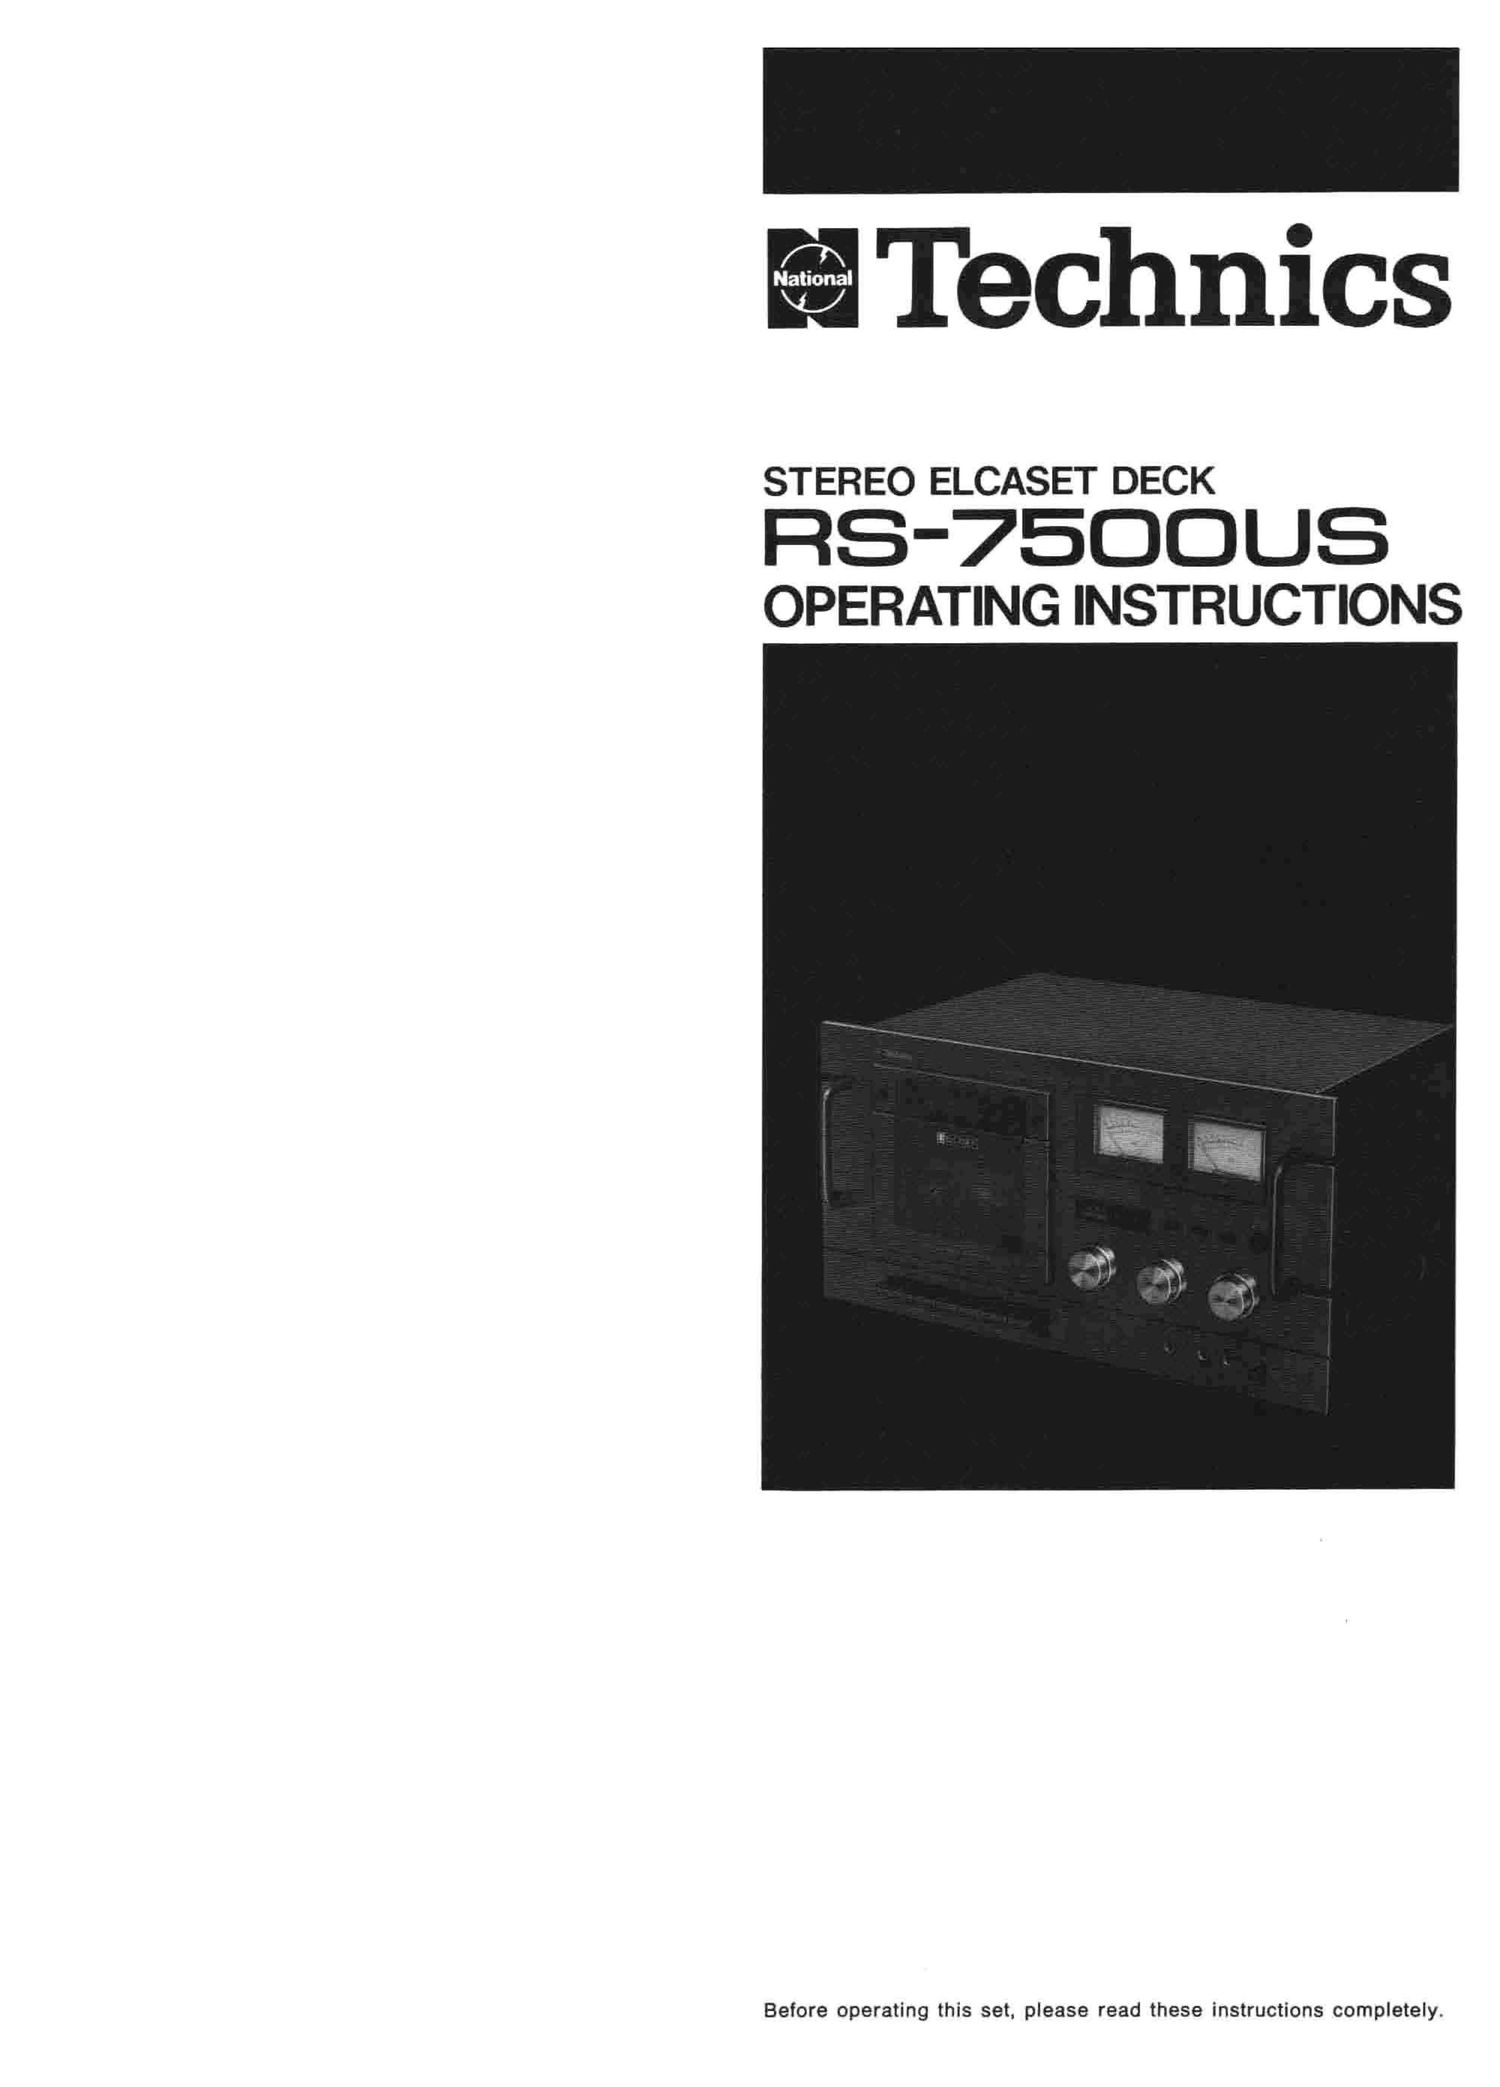 Technics RS 7500 US Owners Manual